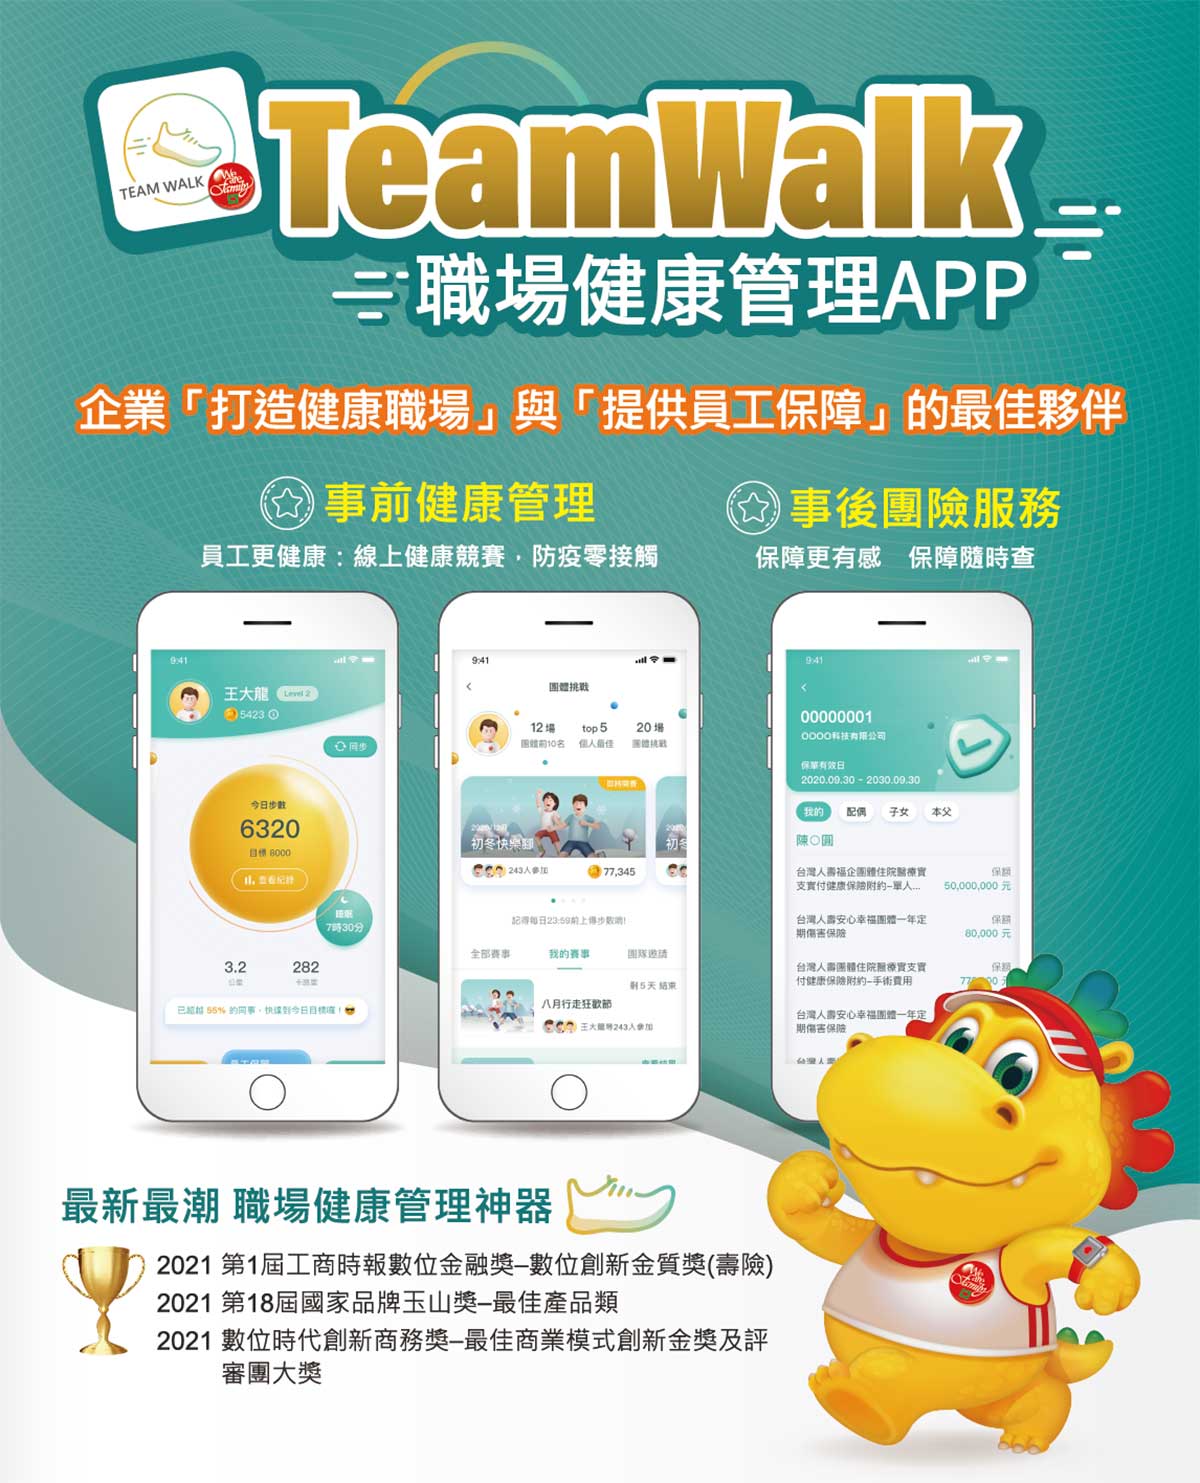 TeamWalk 是台灣人壽2021年全新推出的職場健康管理APP，除了有投保台灣人壽團體保險的企業員工可使用，一般民眾只要下載並完成註冊，也可以馬上開始使用TeamWalk。  TeamWalk不僅擁有一目了然的步數與睡眠圖表，更設計好玩的多人互動、雙人挑戰和龍珠獎勵回饋讓運動變得超有趣，立即下載TeamWalk一次享有數據紀錄、PK挑戰、團體競賽等遊戲化健康服務。